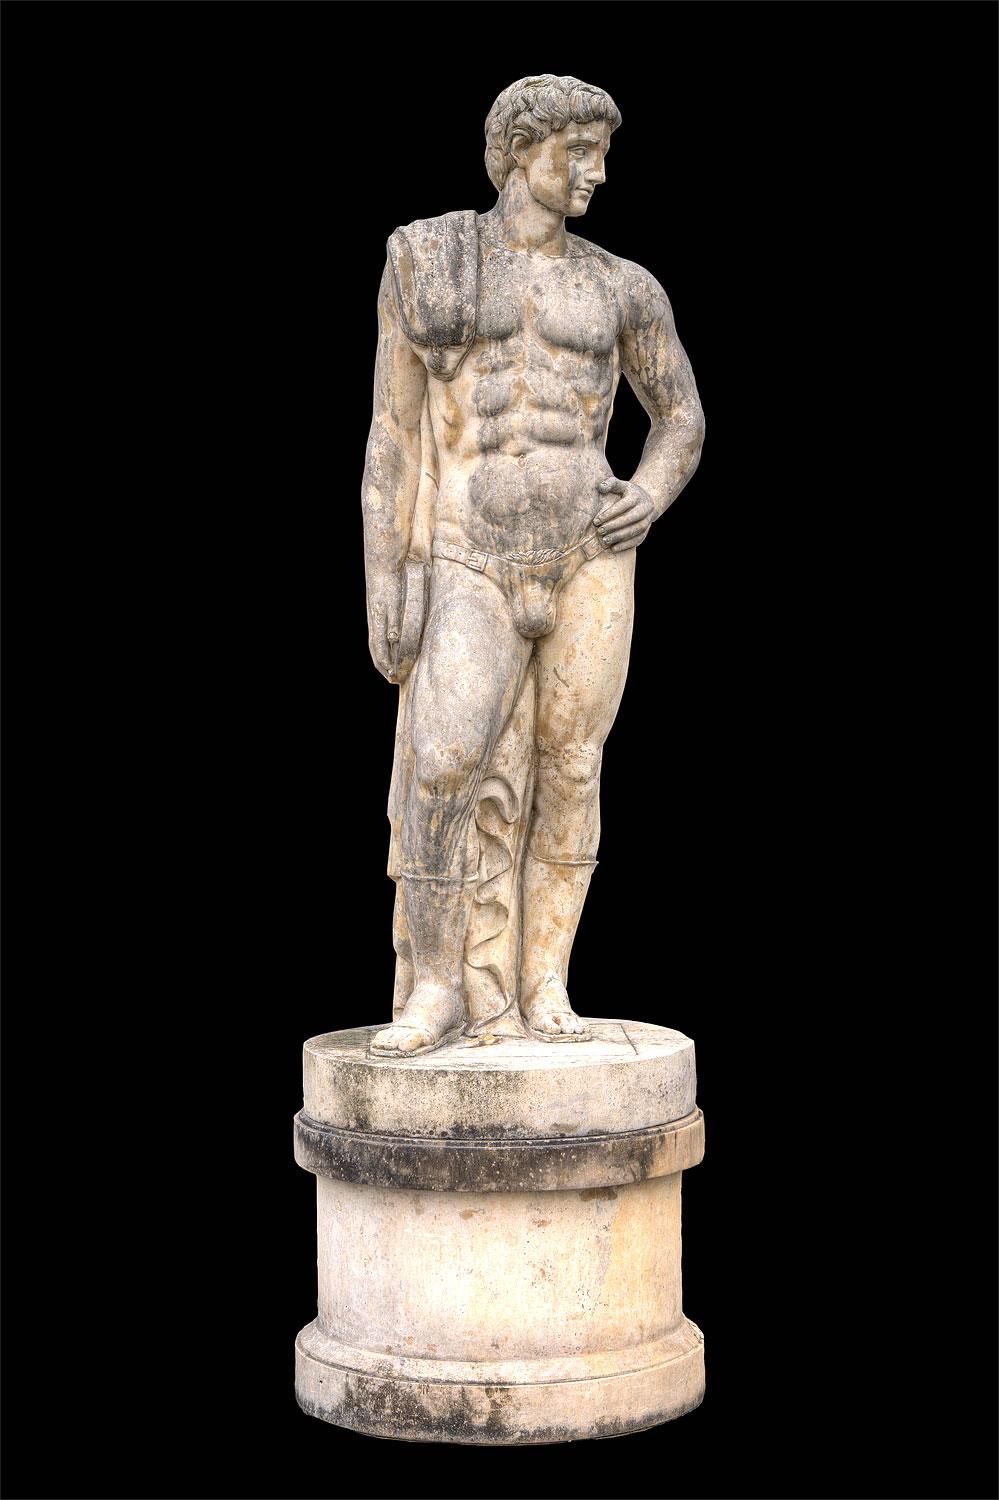  Figuratif figuratif orientaliste italien en marbre monumental  Sculptures - Nus en vente 14